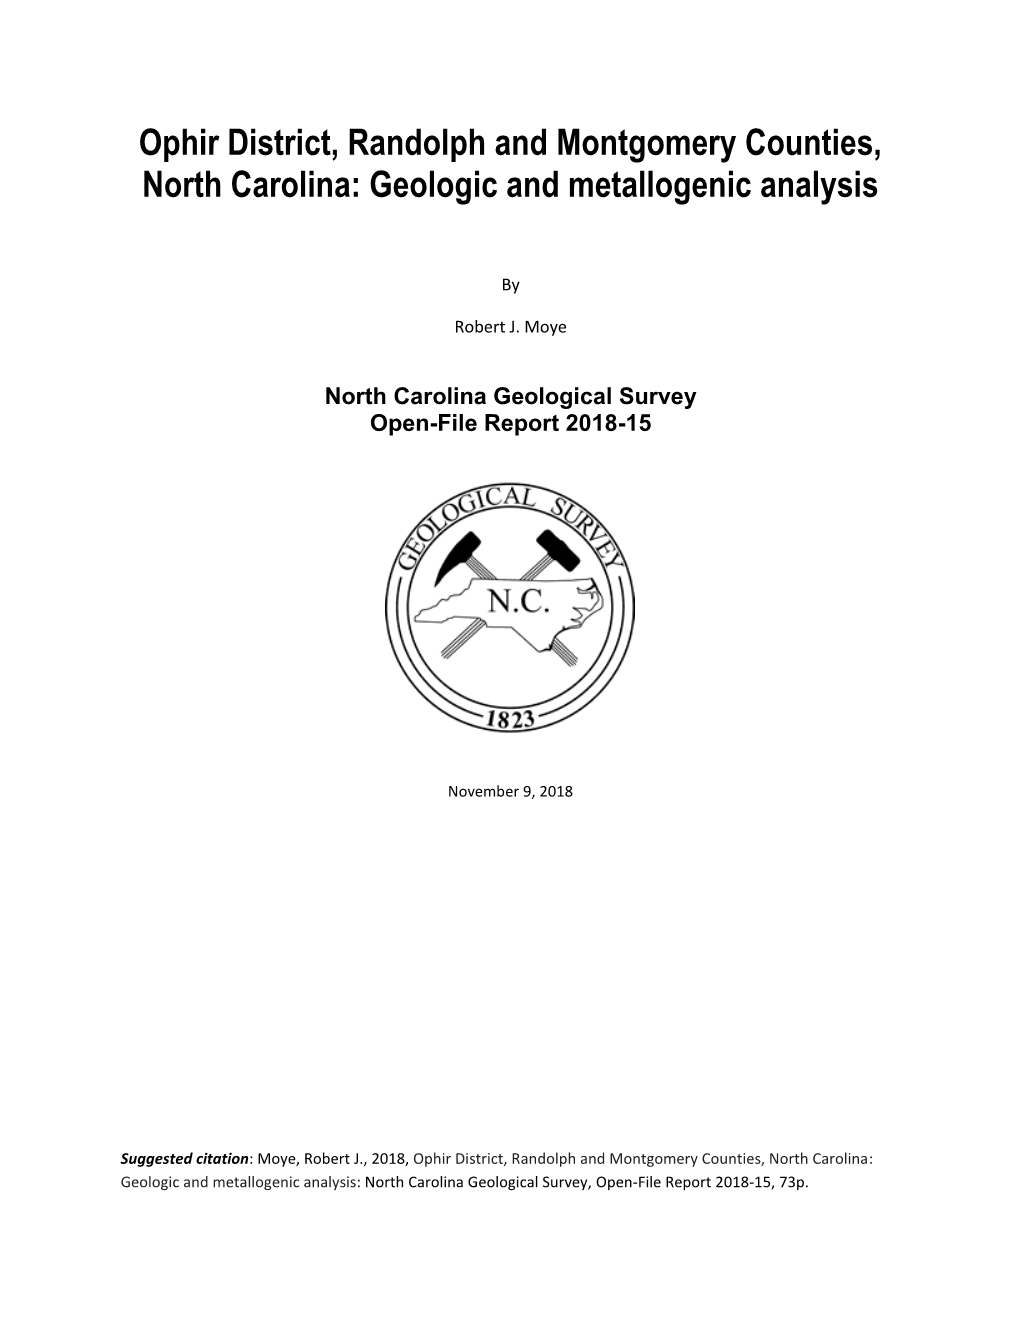 Ophir District, Randolph and Montgomery Counties, North Carolina: Geologic and Metallogenic Analysis